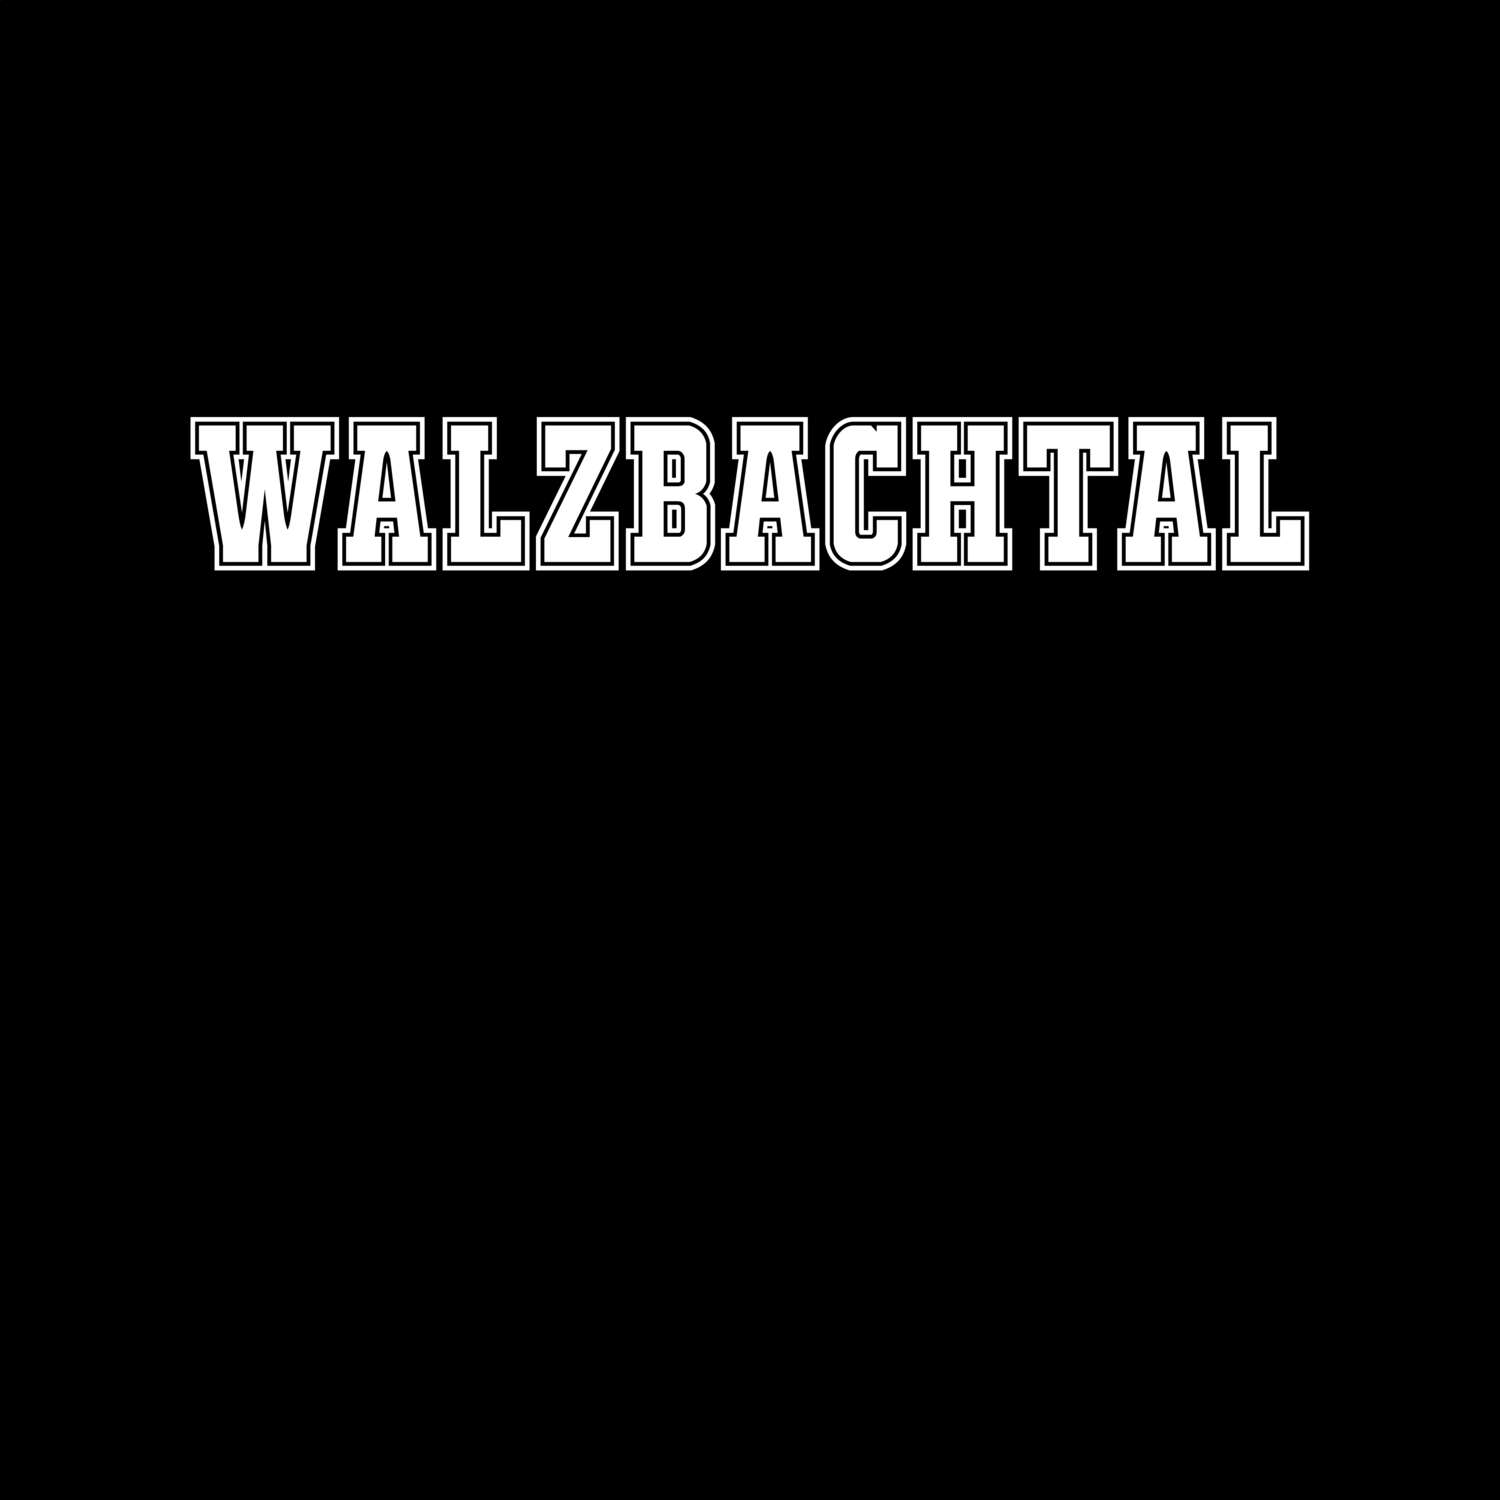 Walzbachtal T-Shirt »Classic«